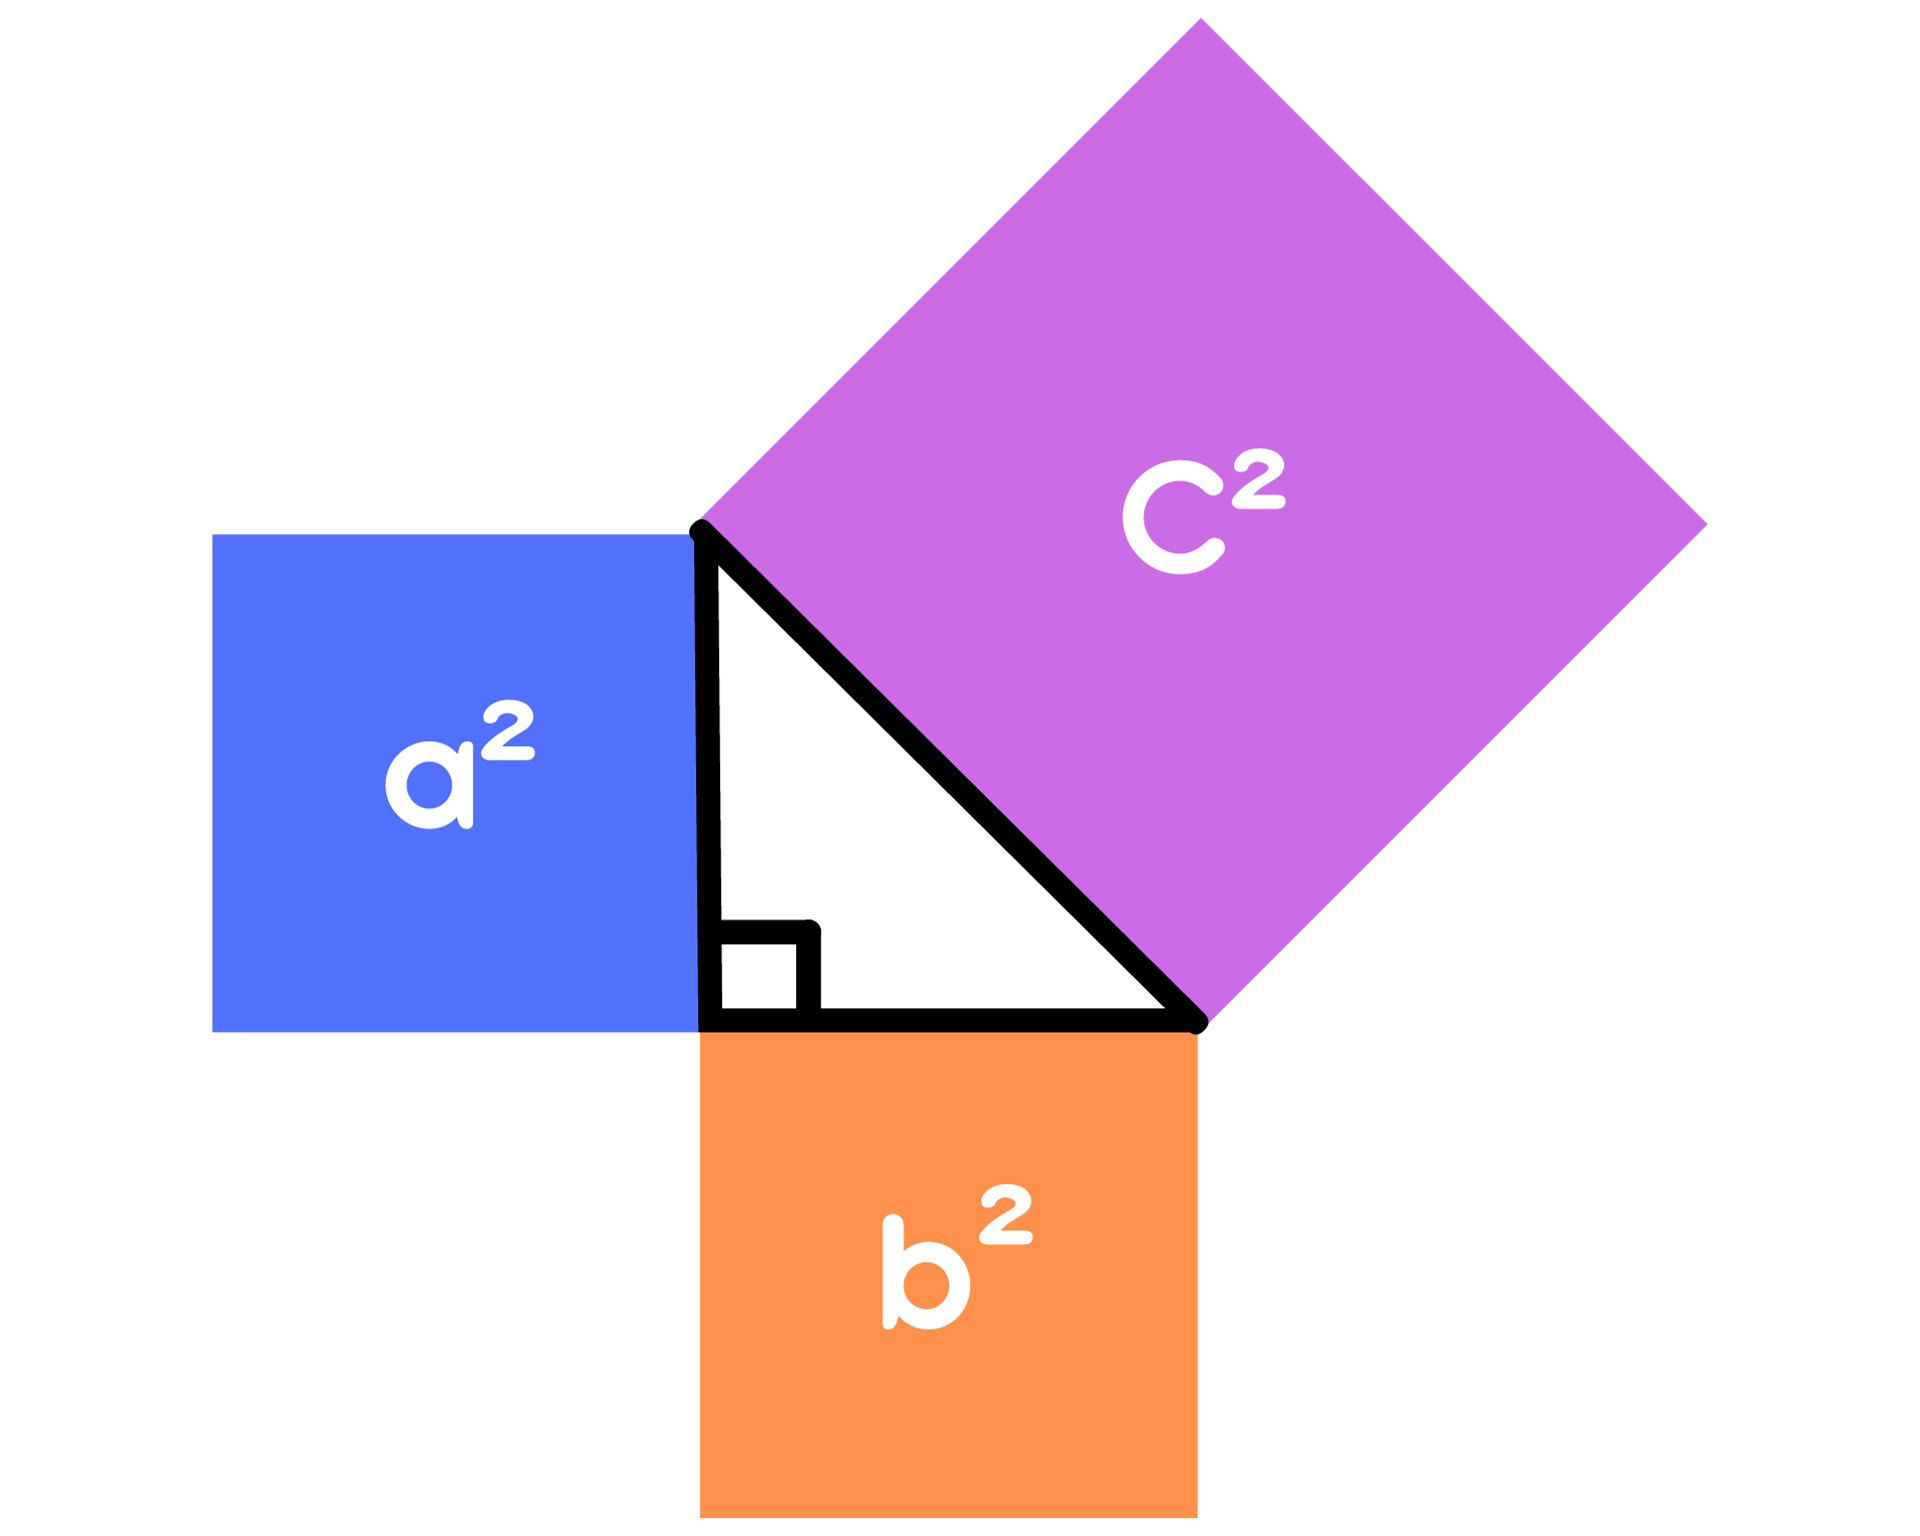 Triângulo retângulo: características e o Teorema de Pitágoras